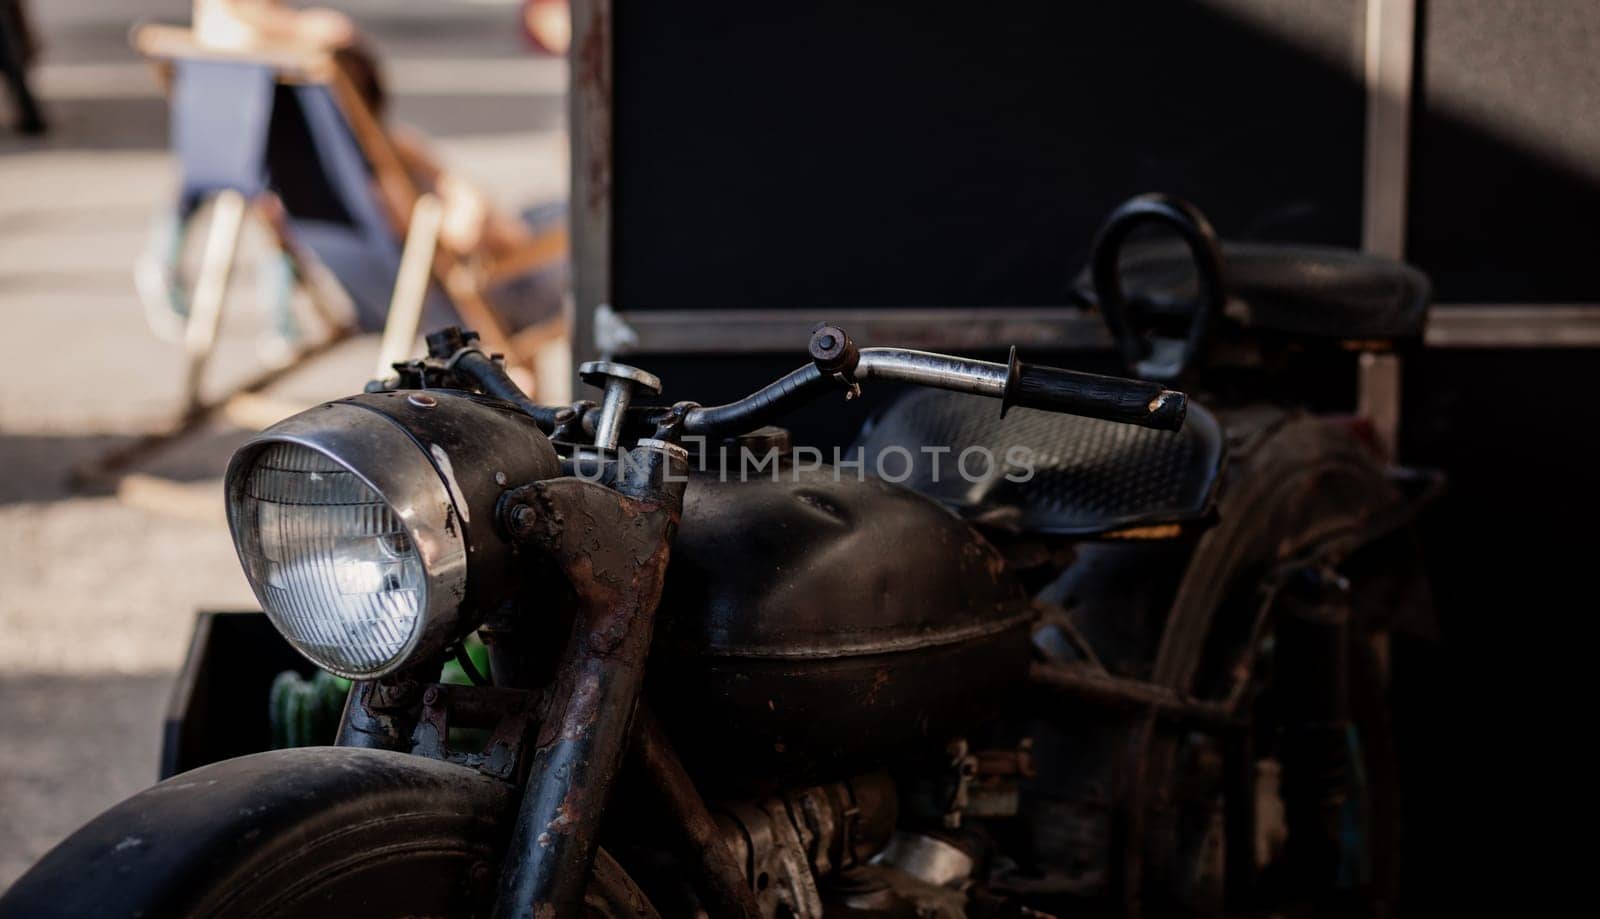 vintage motorcycle detail, retro headlight